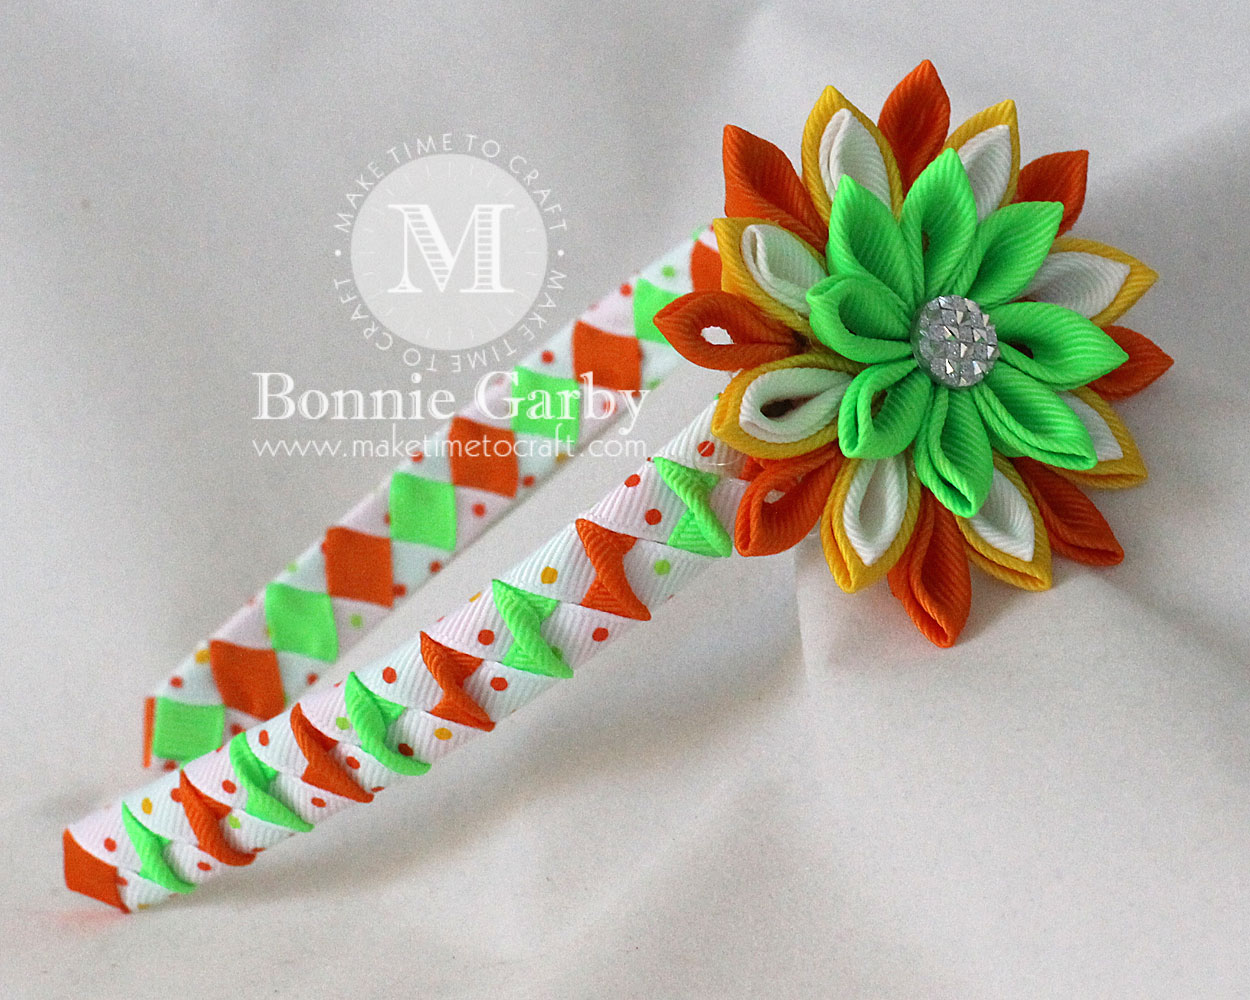 Woven Ribbon Headbands And Ribbon Kanzashi Flowers And Tutorials Make Time To Craft